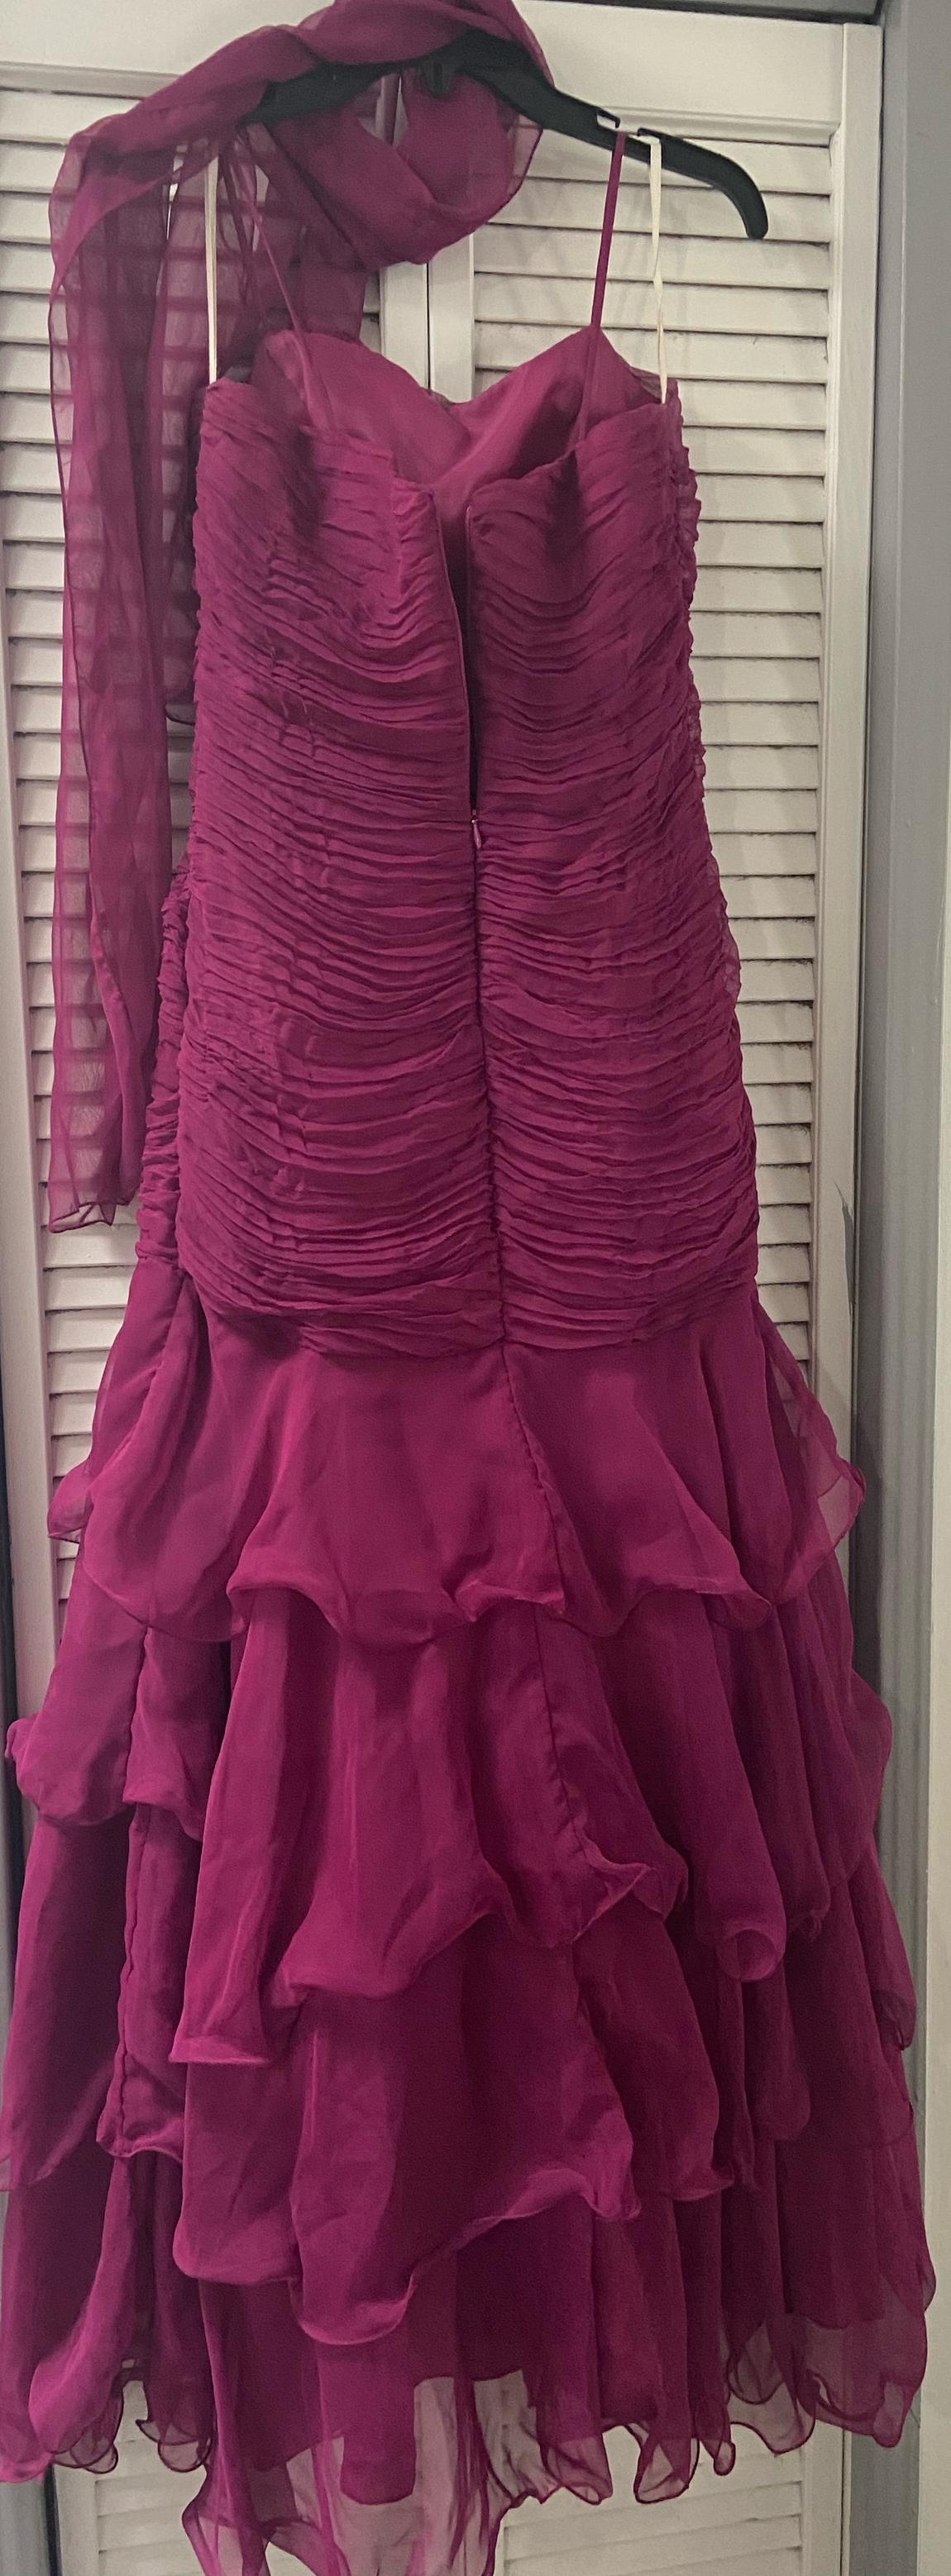 Girls Size 7 Prom Purple Mermaid Dress on Queenly